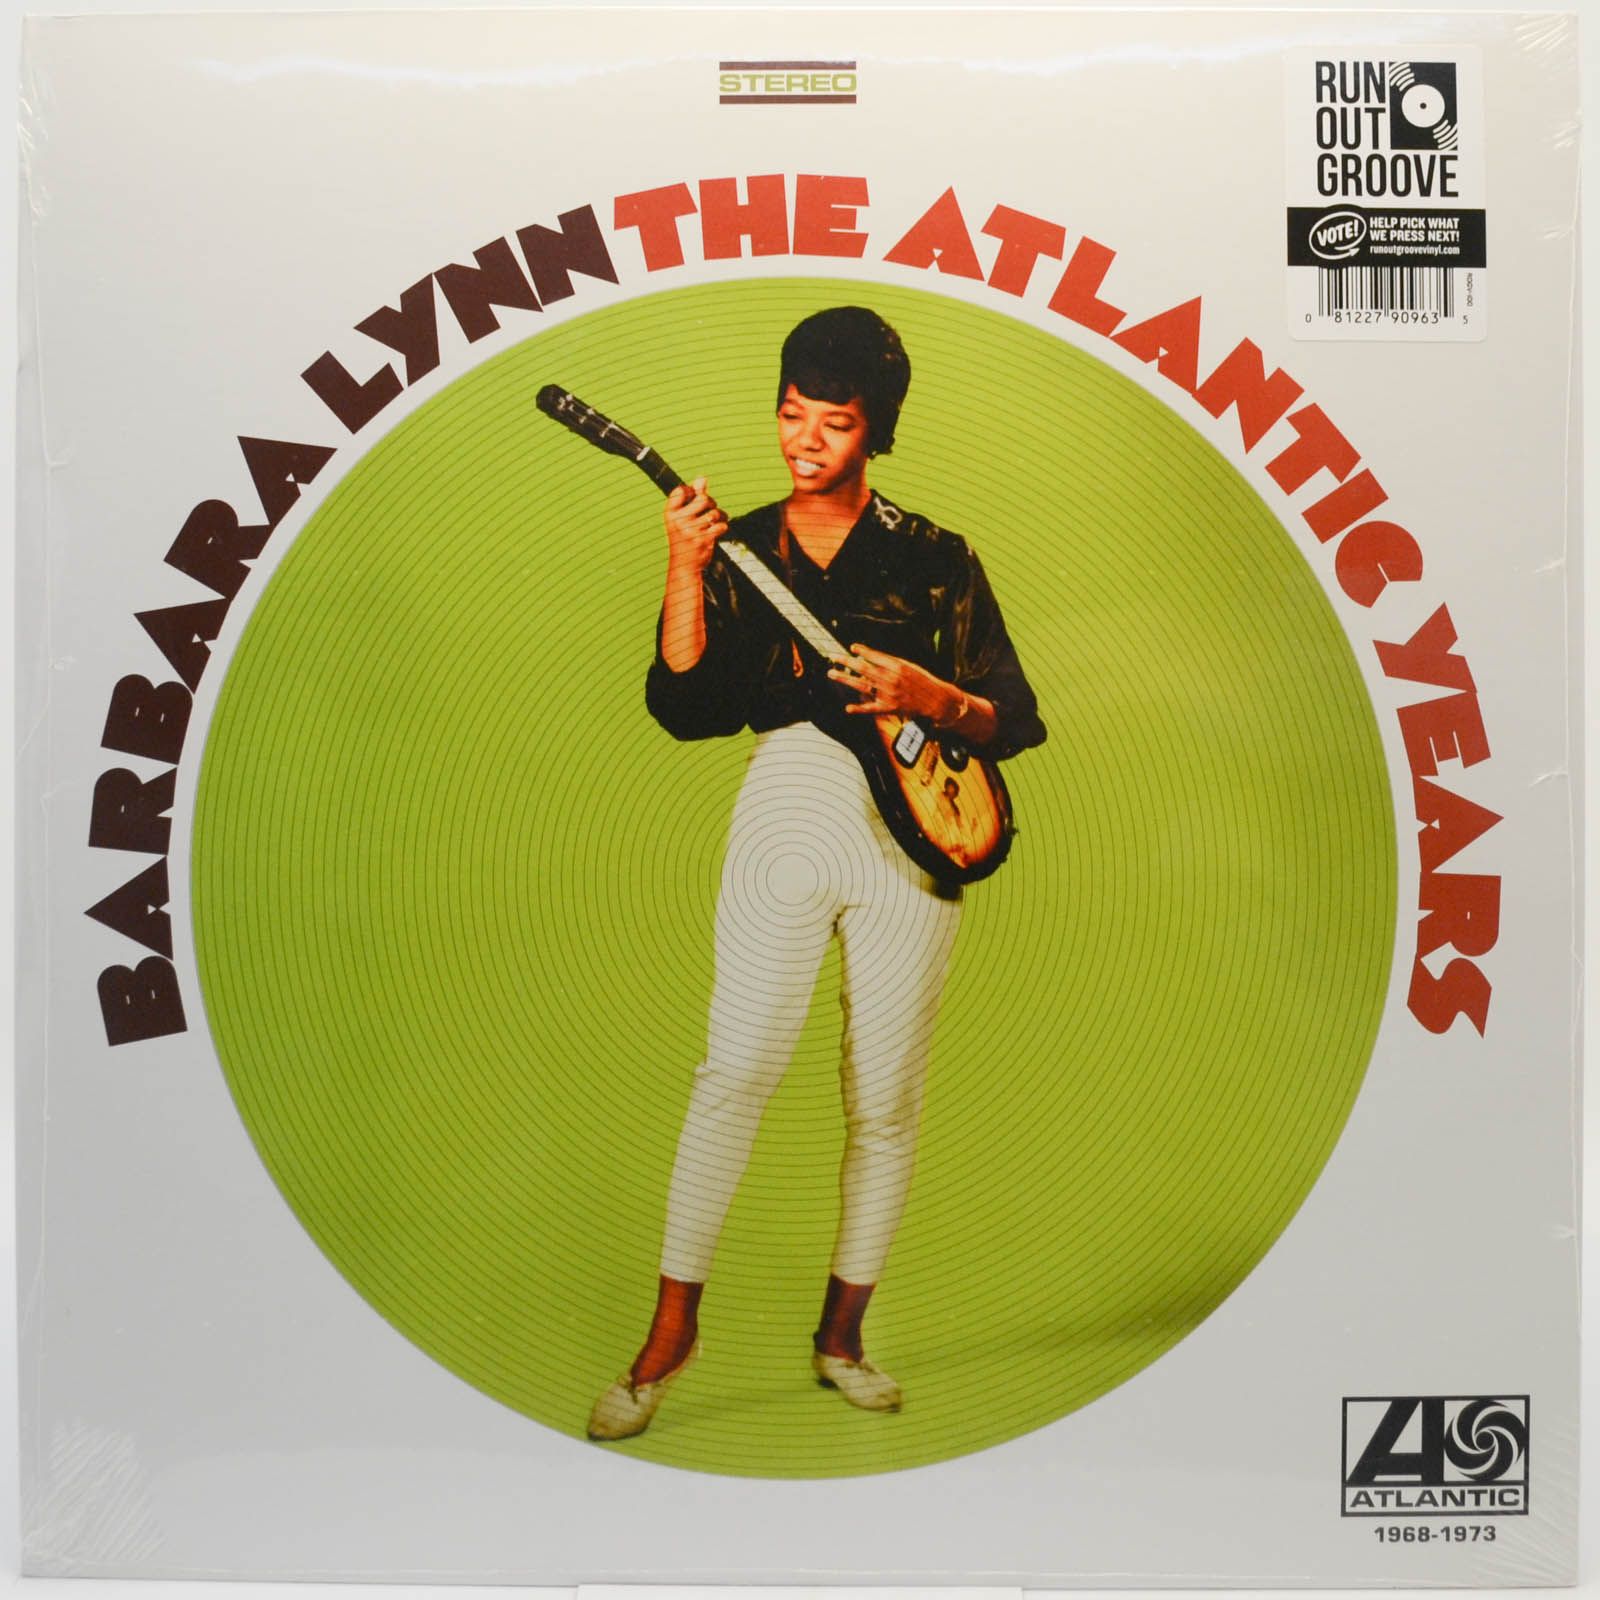 Barbara Lynn — The Atlantic Years 1968-1973 (USA), 2020